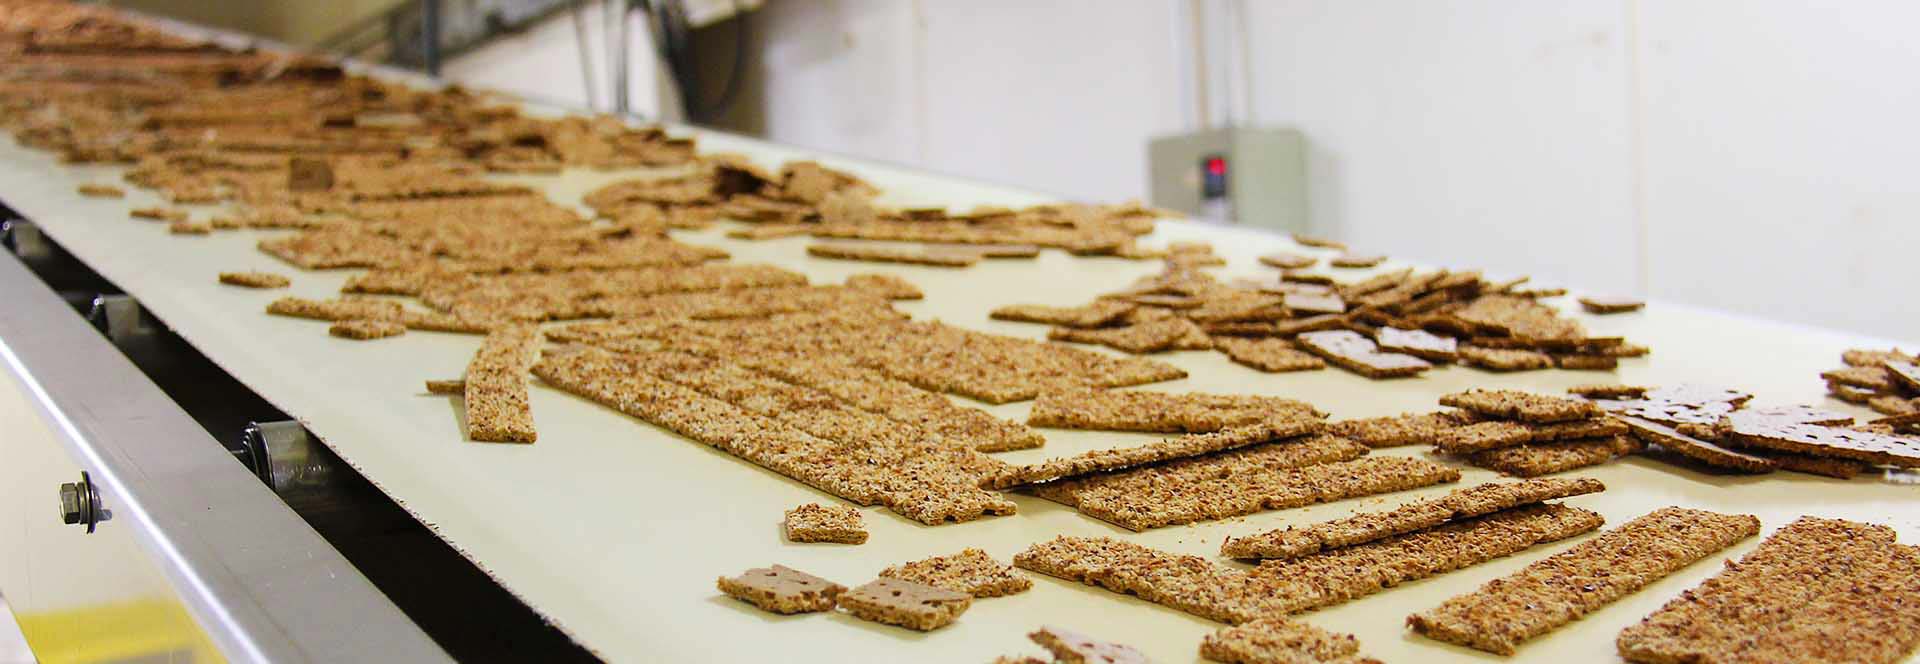 cracker conveyor belt Imagine baking